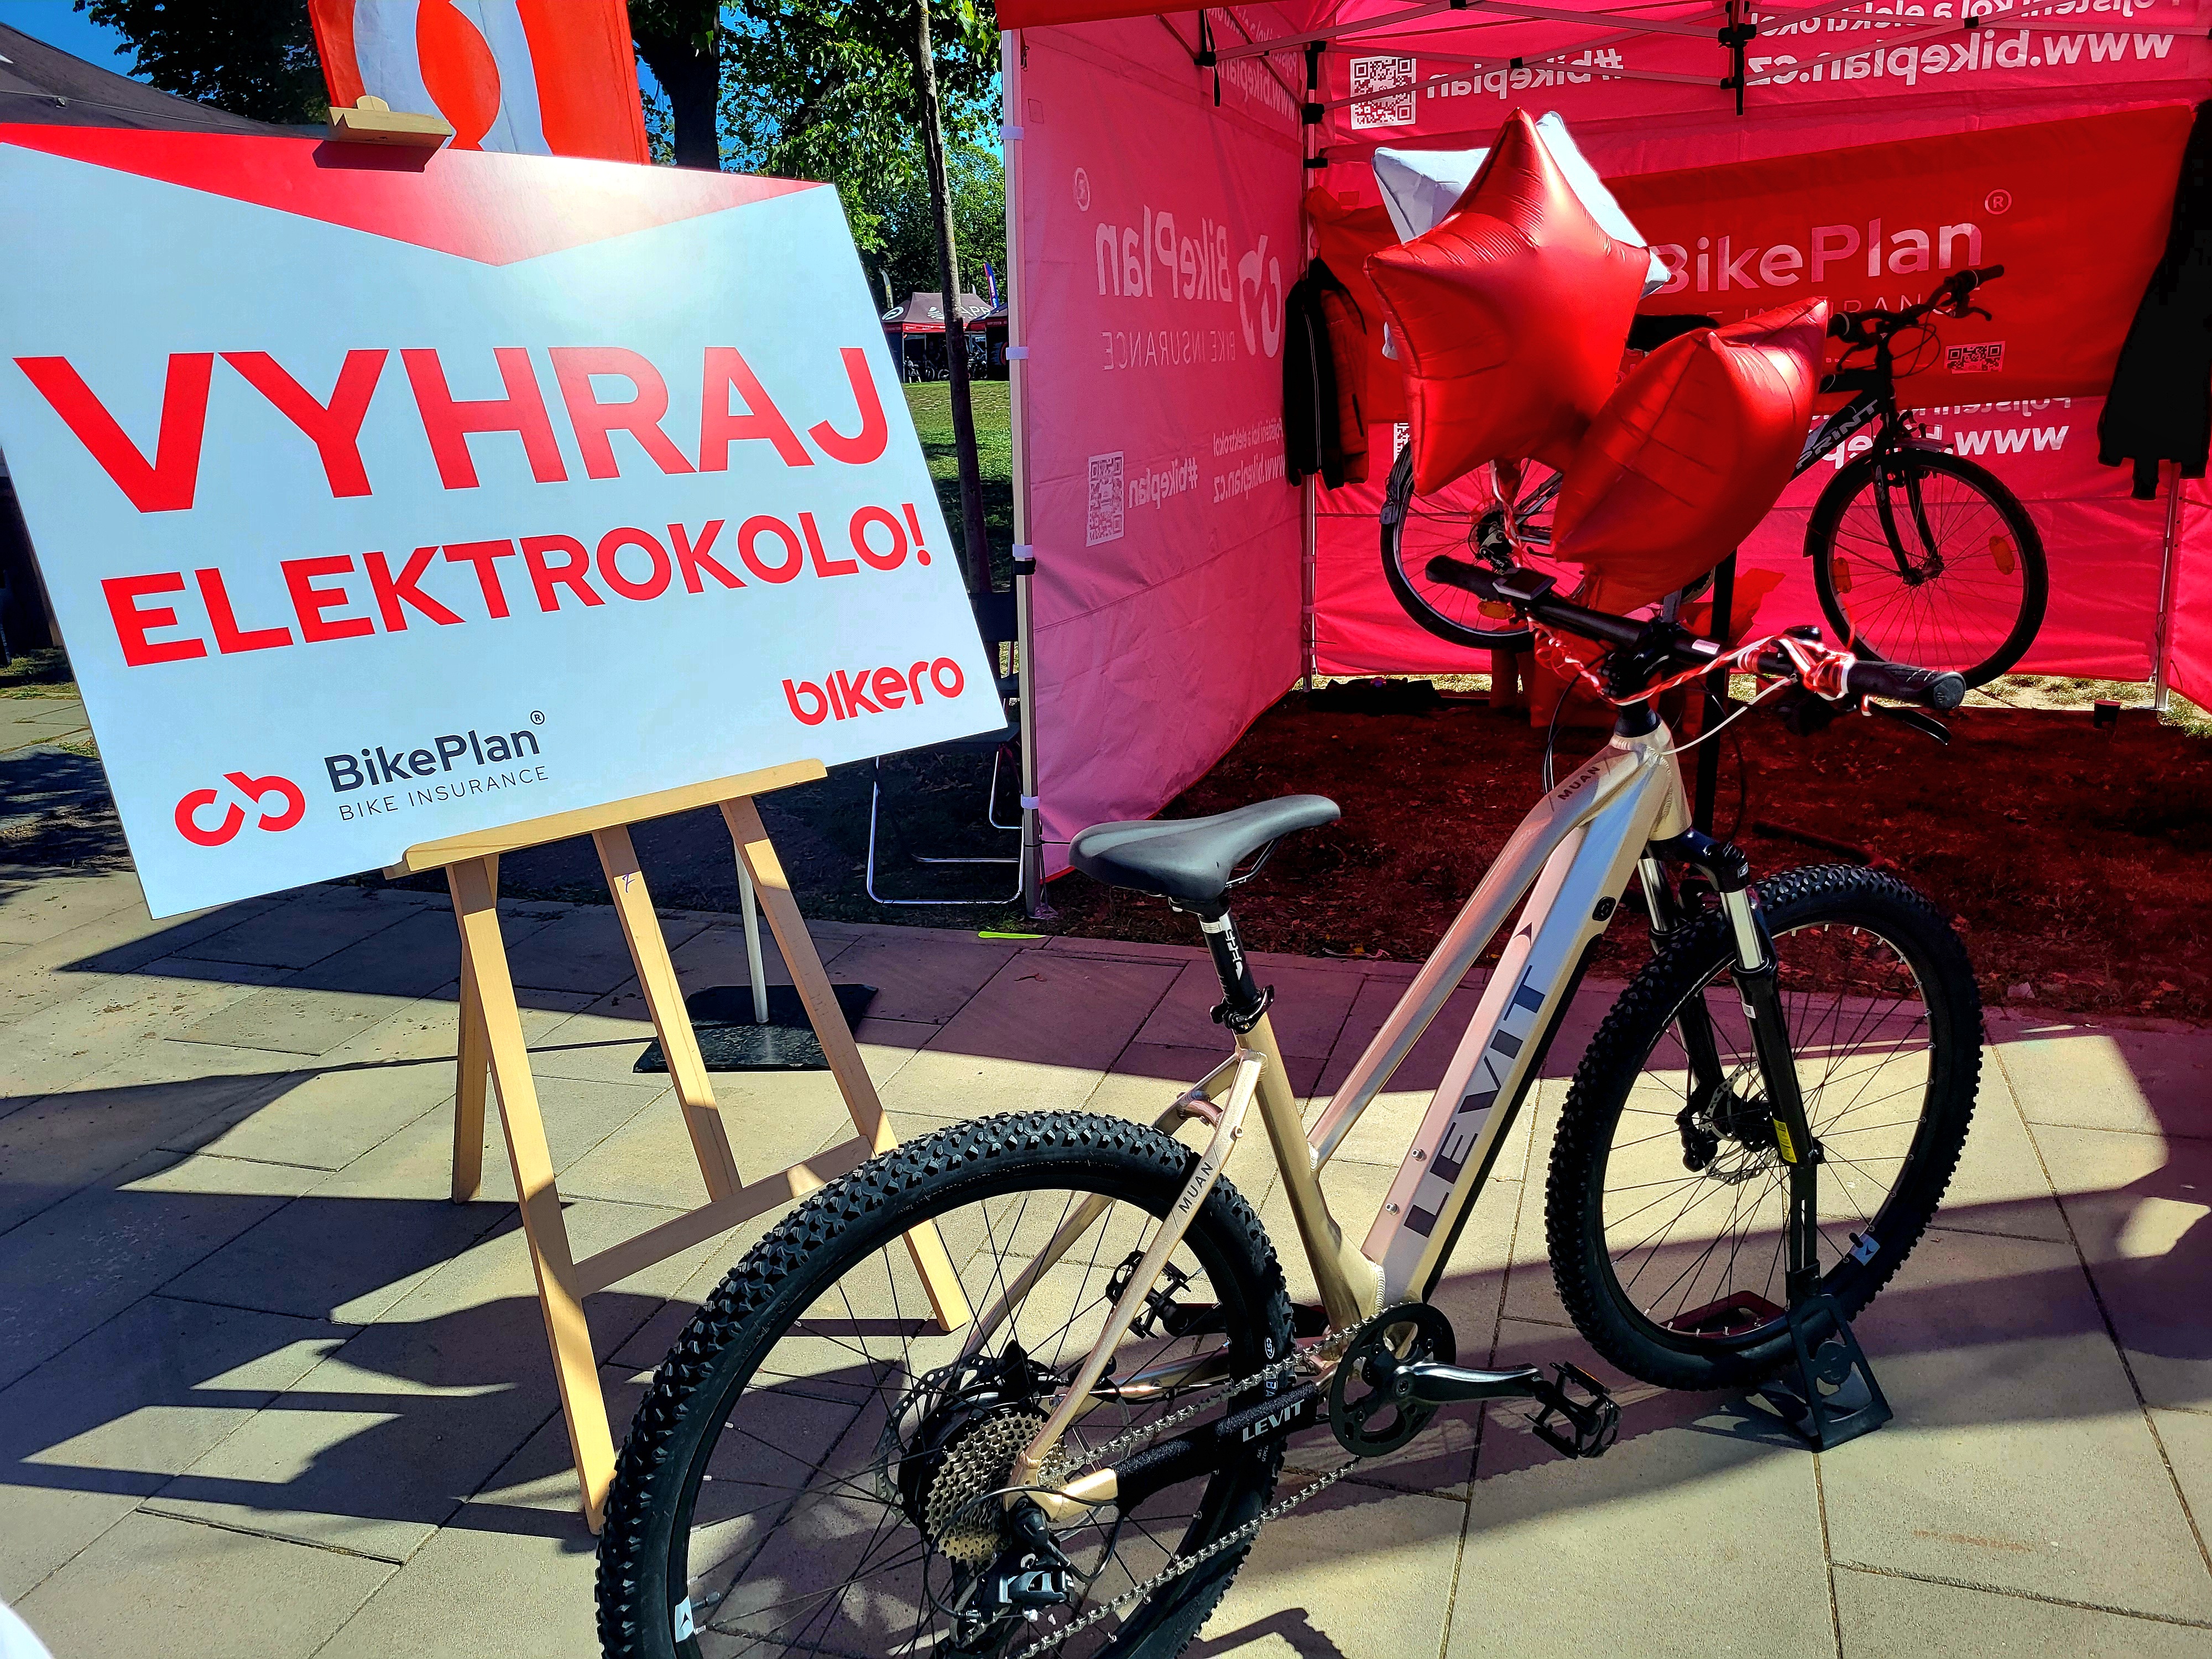 BikePlan ve spolupraci s Bikero predali vyhru z Prague Bike Festivalu - elektrokolo Levit